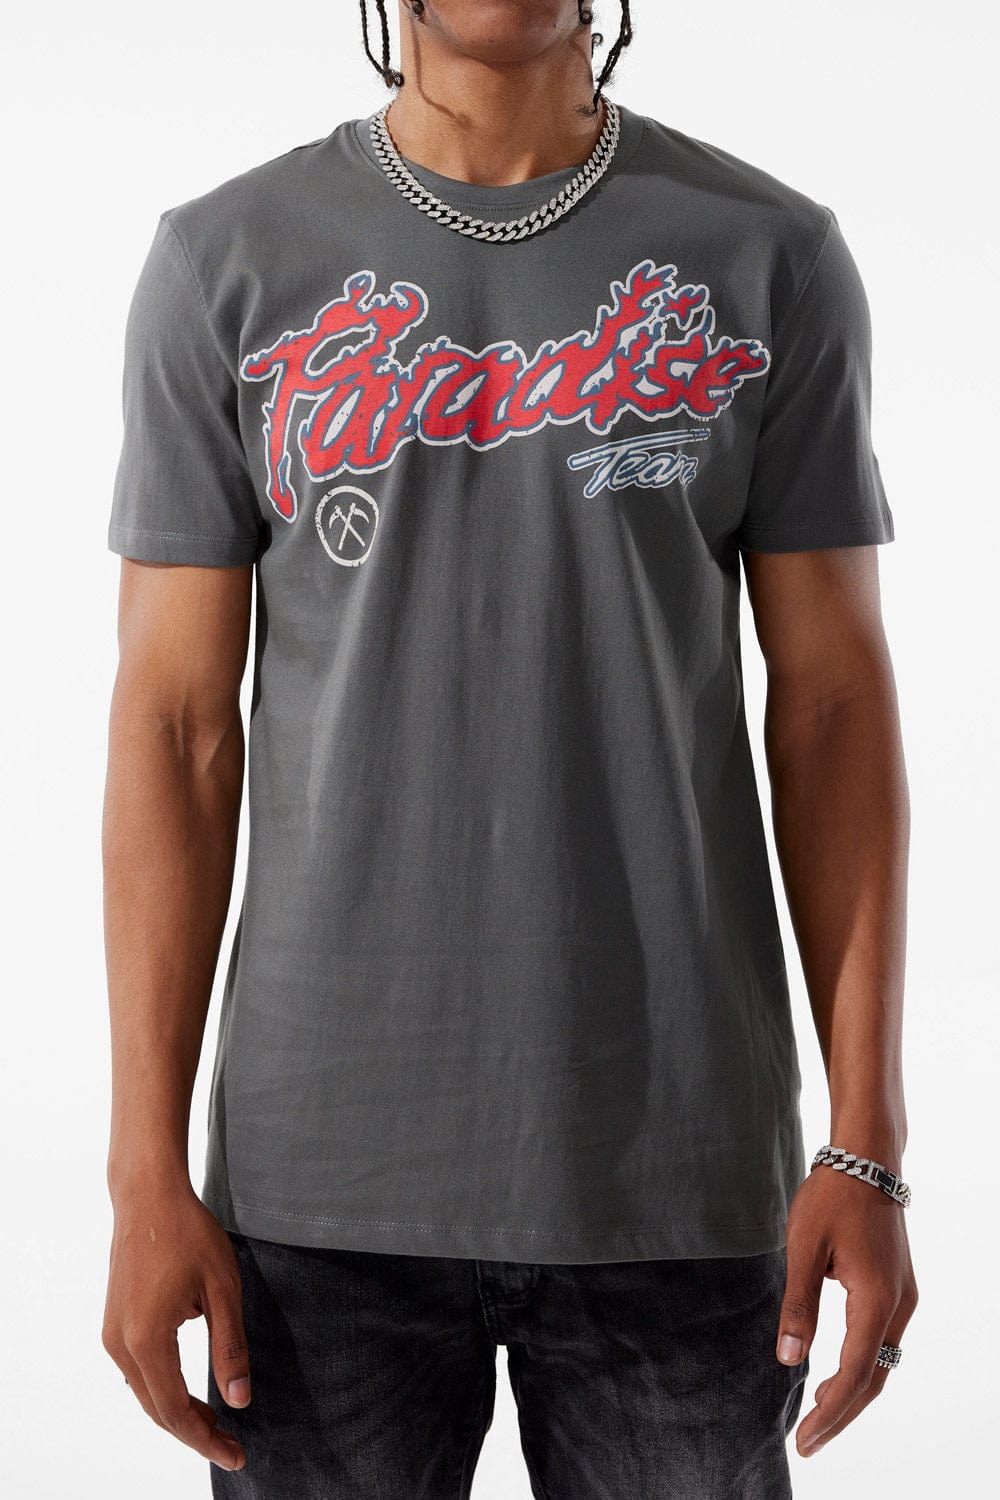 Jordan Craig Paradise Tour T-Shirt (Charcoal) S / Charcoal